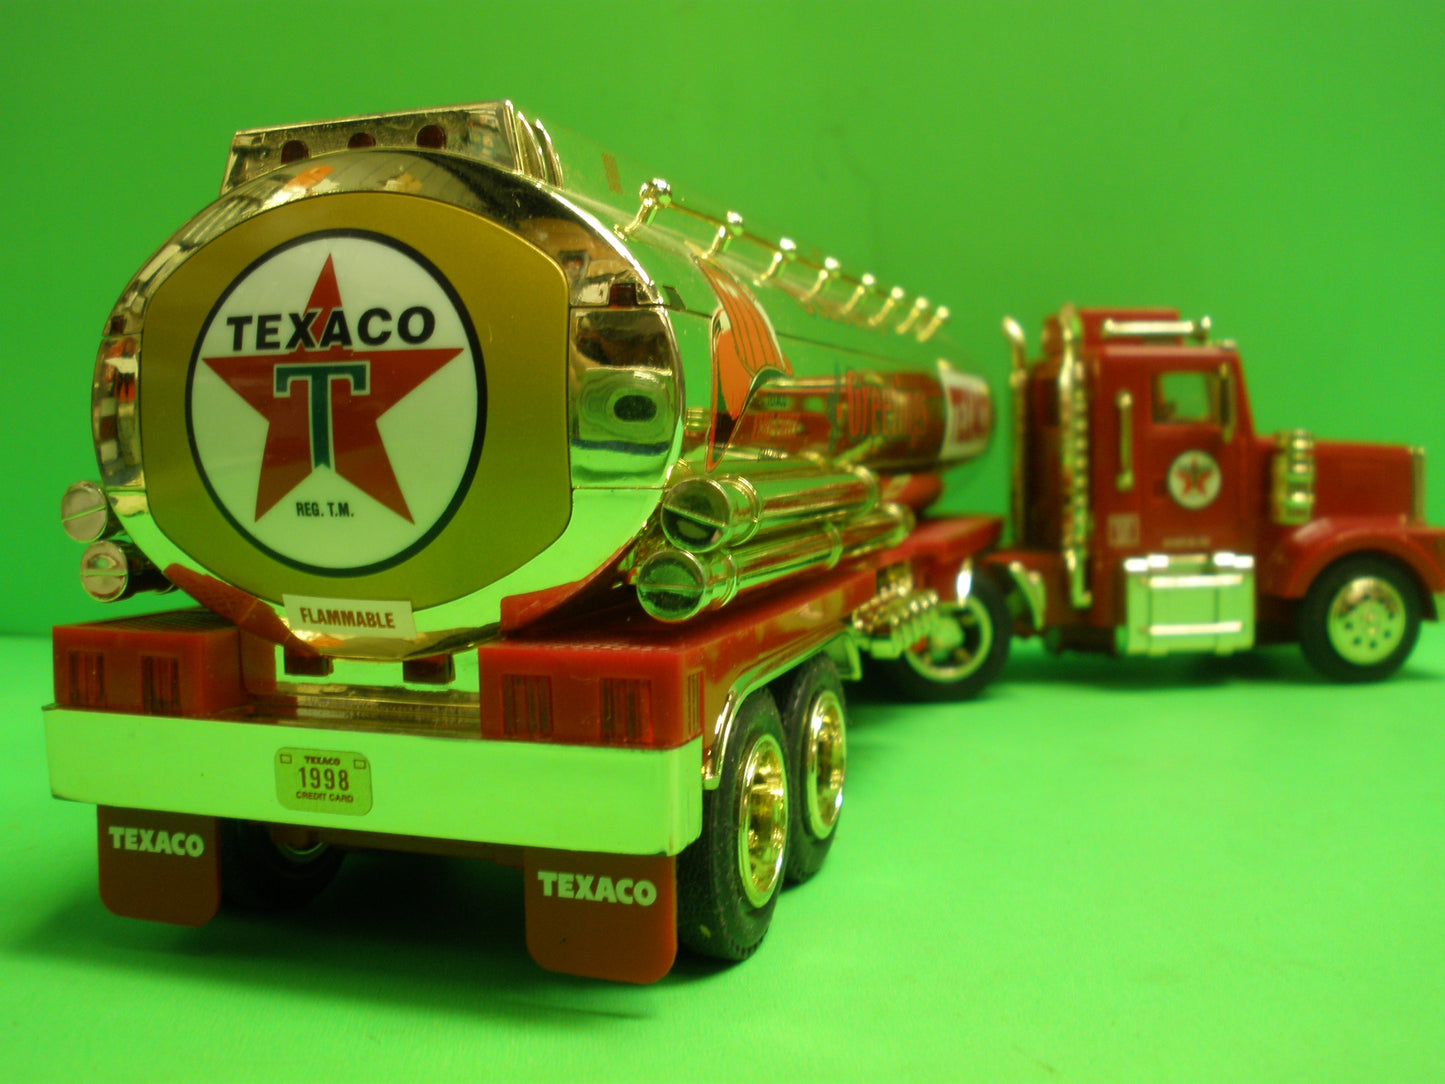 Texaco Fire Chief Season's Greetings Tanker Truck Credit Card Series